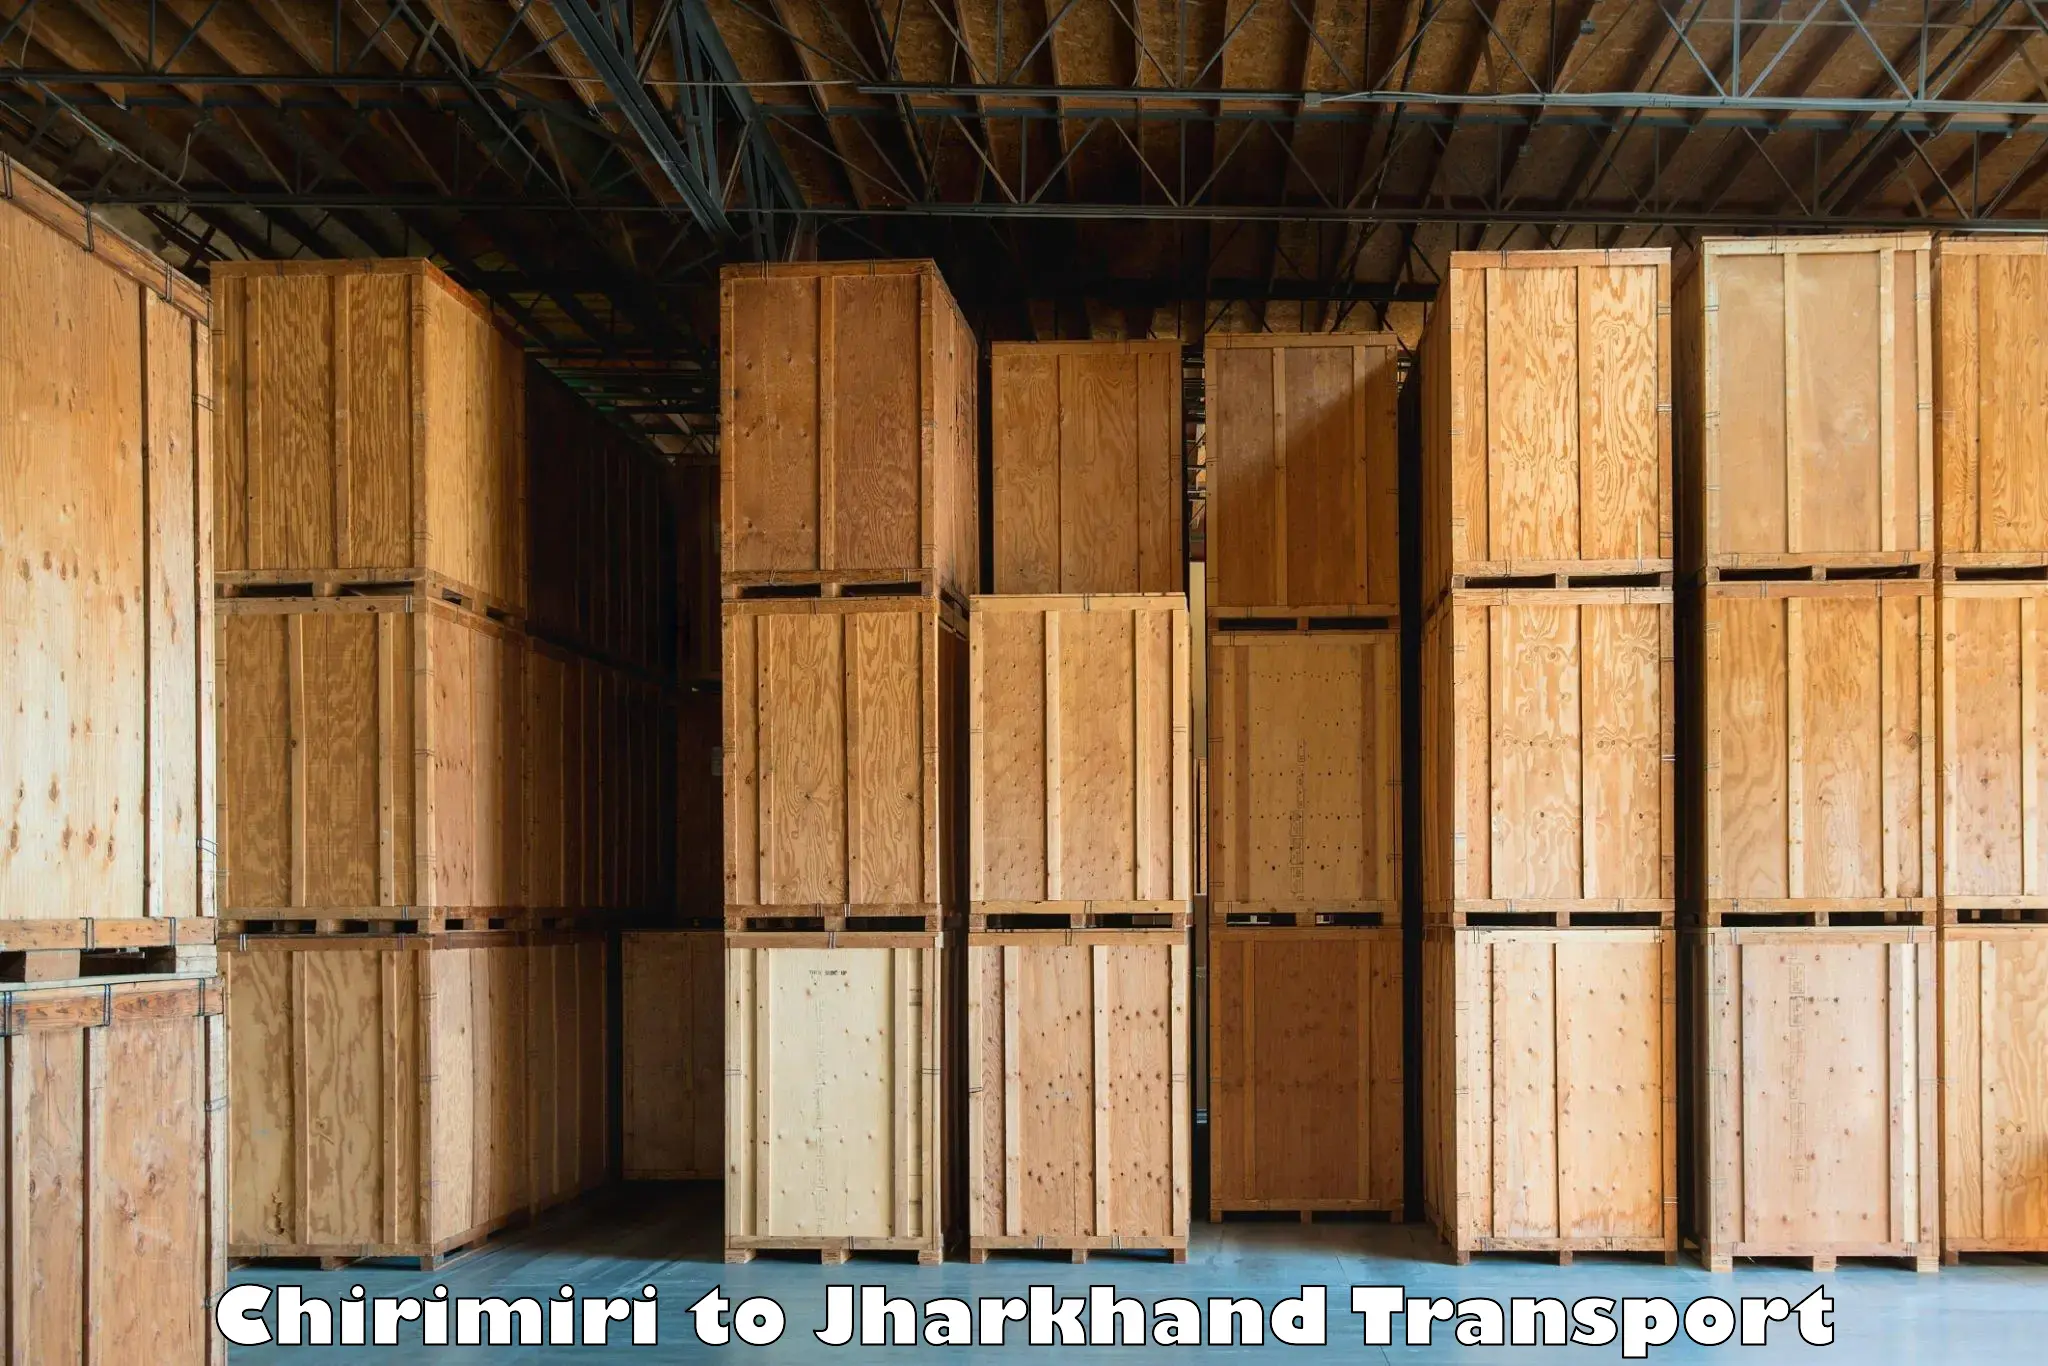 Truck transport companies in India Chirimiri to Jharkhand